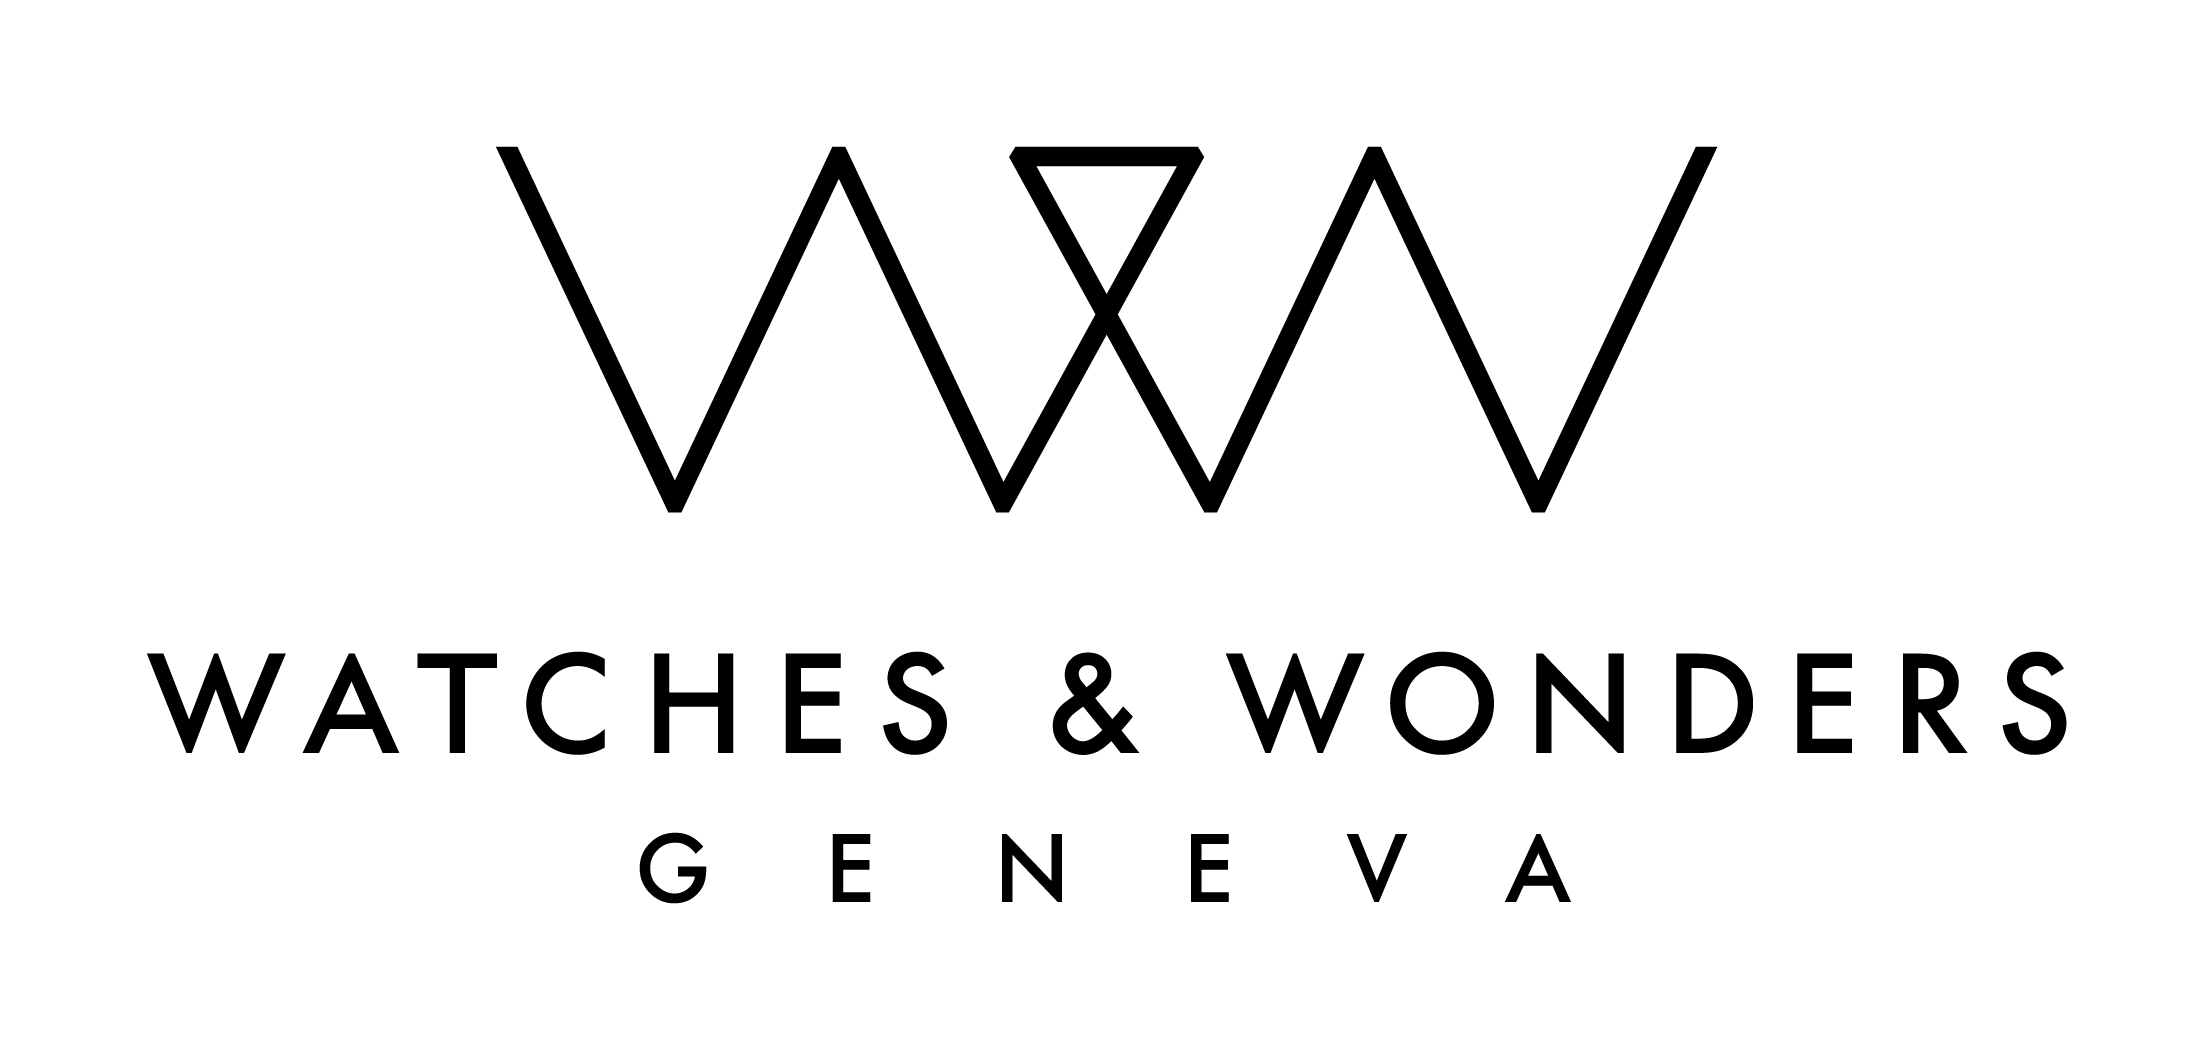 Sihh ww geneva logo noir